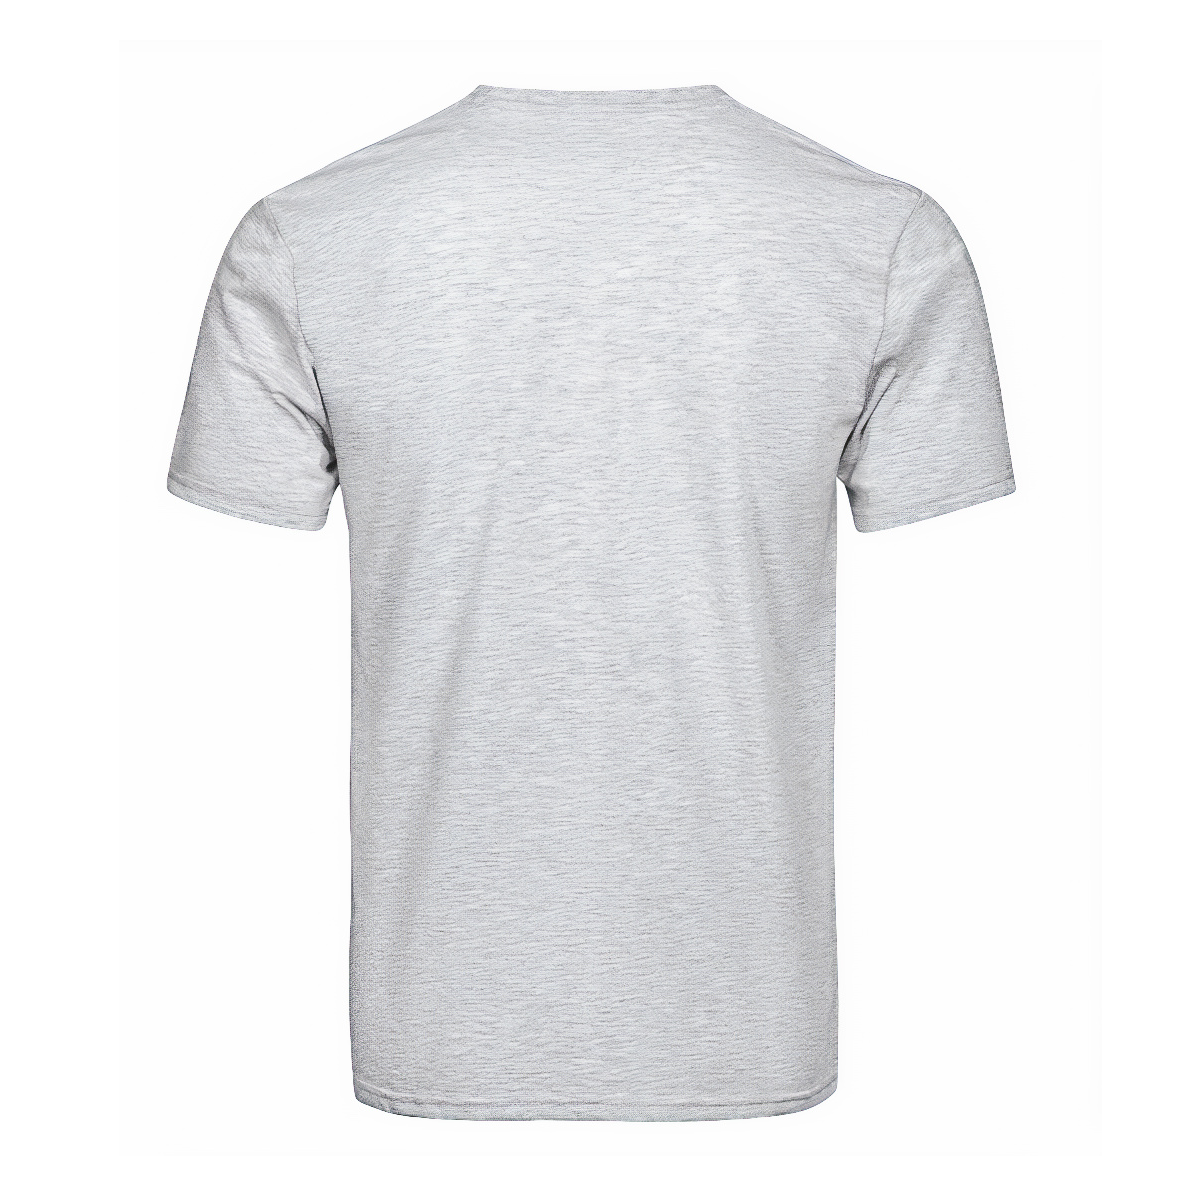 Chattan Tartan Crest T-shirt - I'm not yelling style